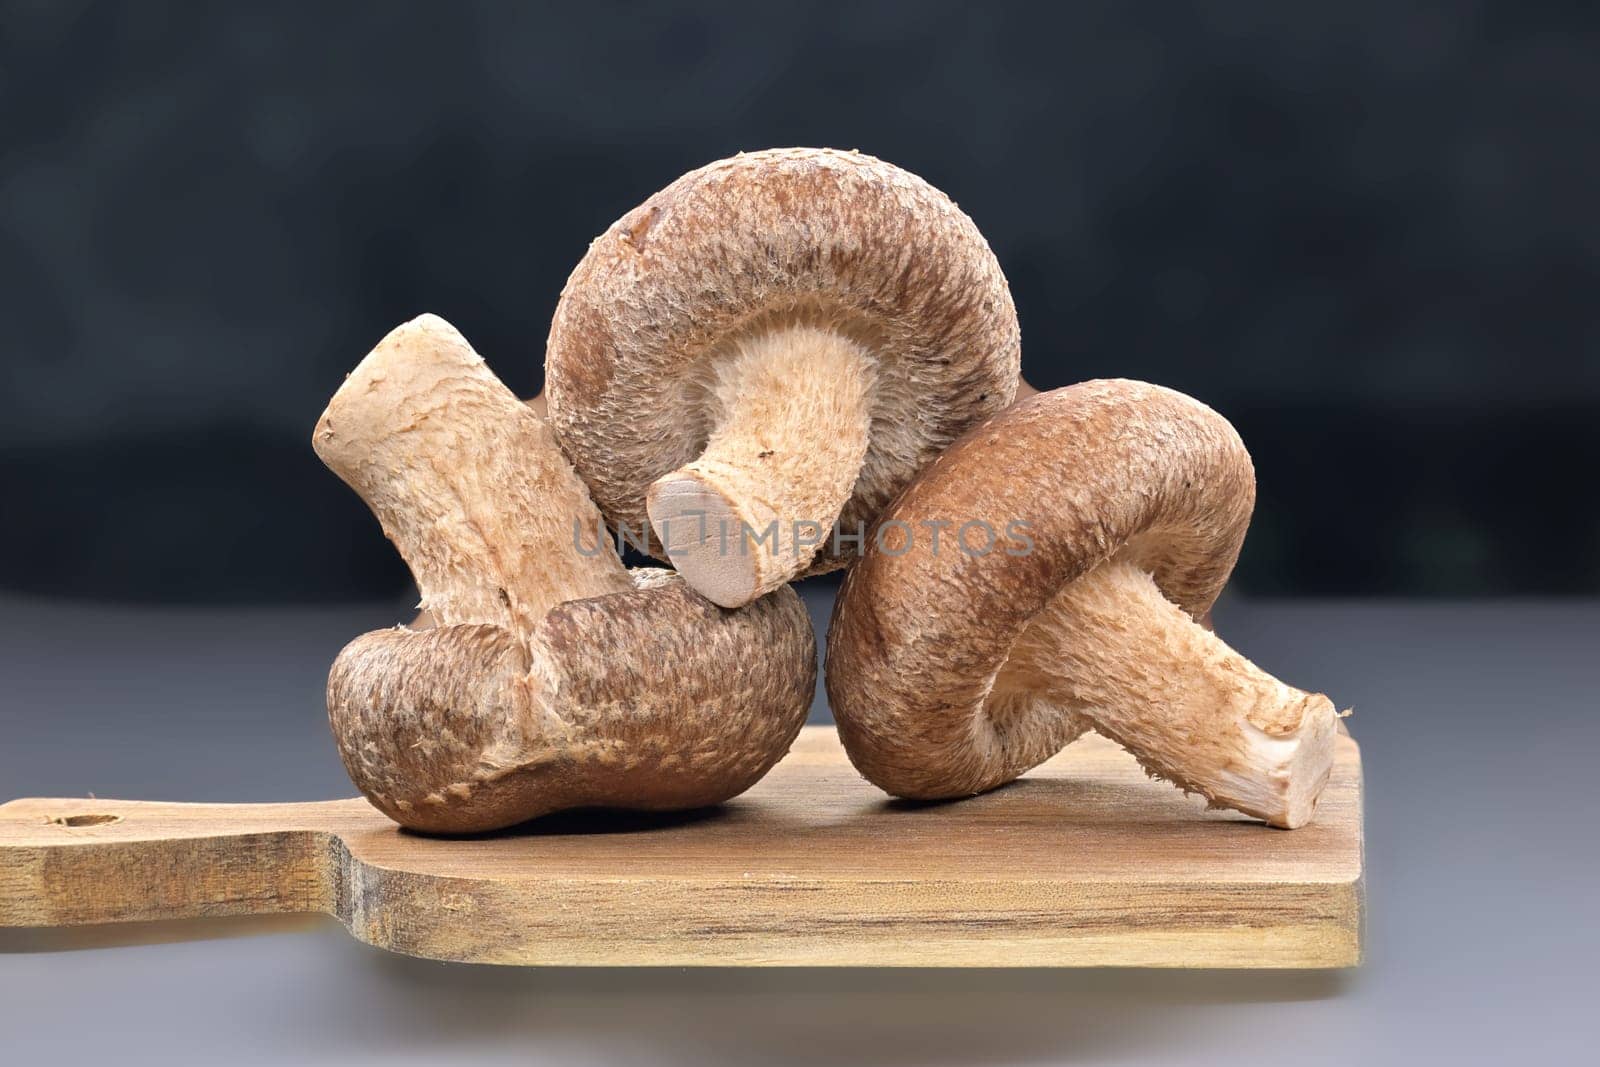 Shiitake mushrooms on cutting board over dark background by NetPix